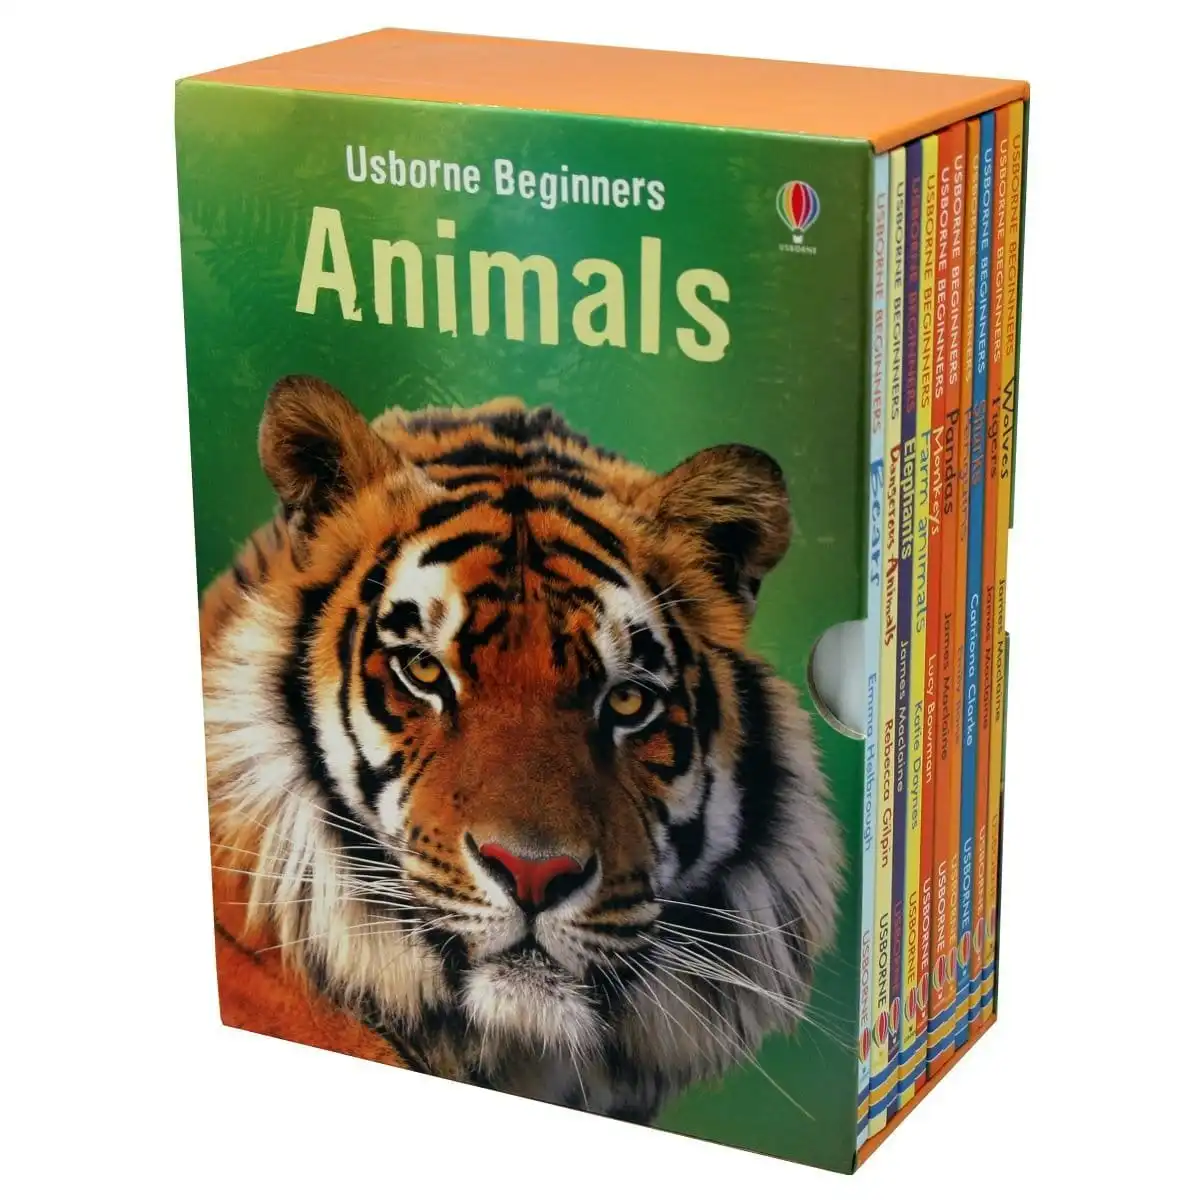 Usborne Beginners Animals - 10 Copy Box Set